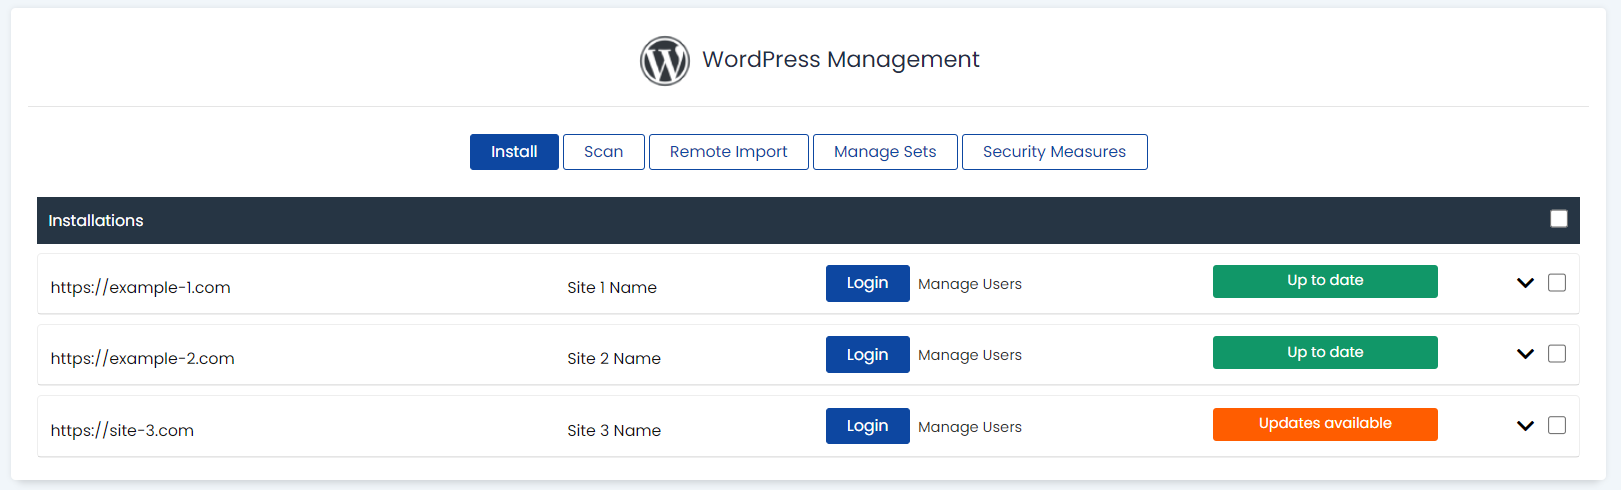 WordPress Manager all Sites - HostWP.io